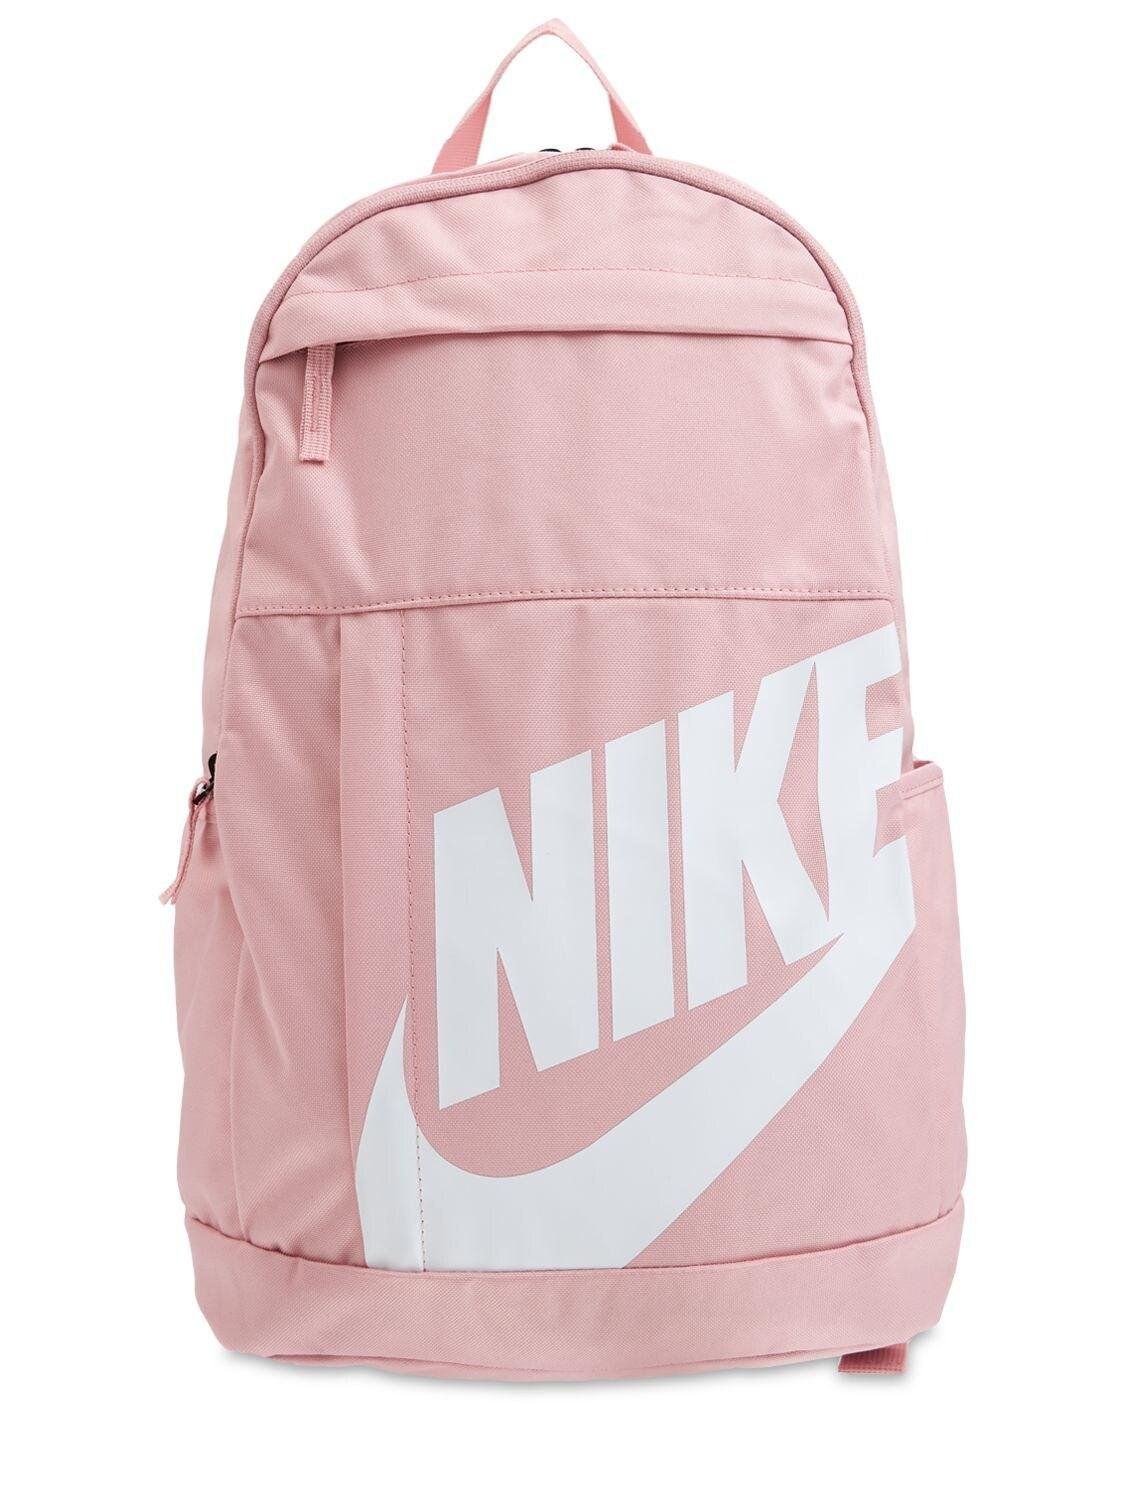 Nike Logo Backpack in Pink Lyst UK